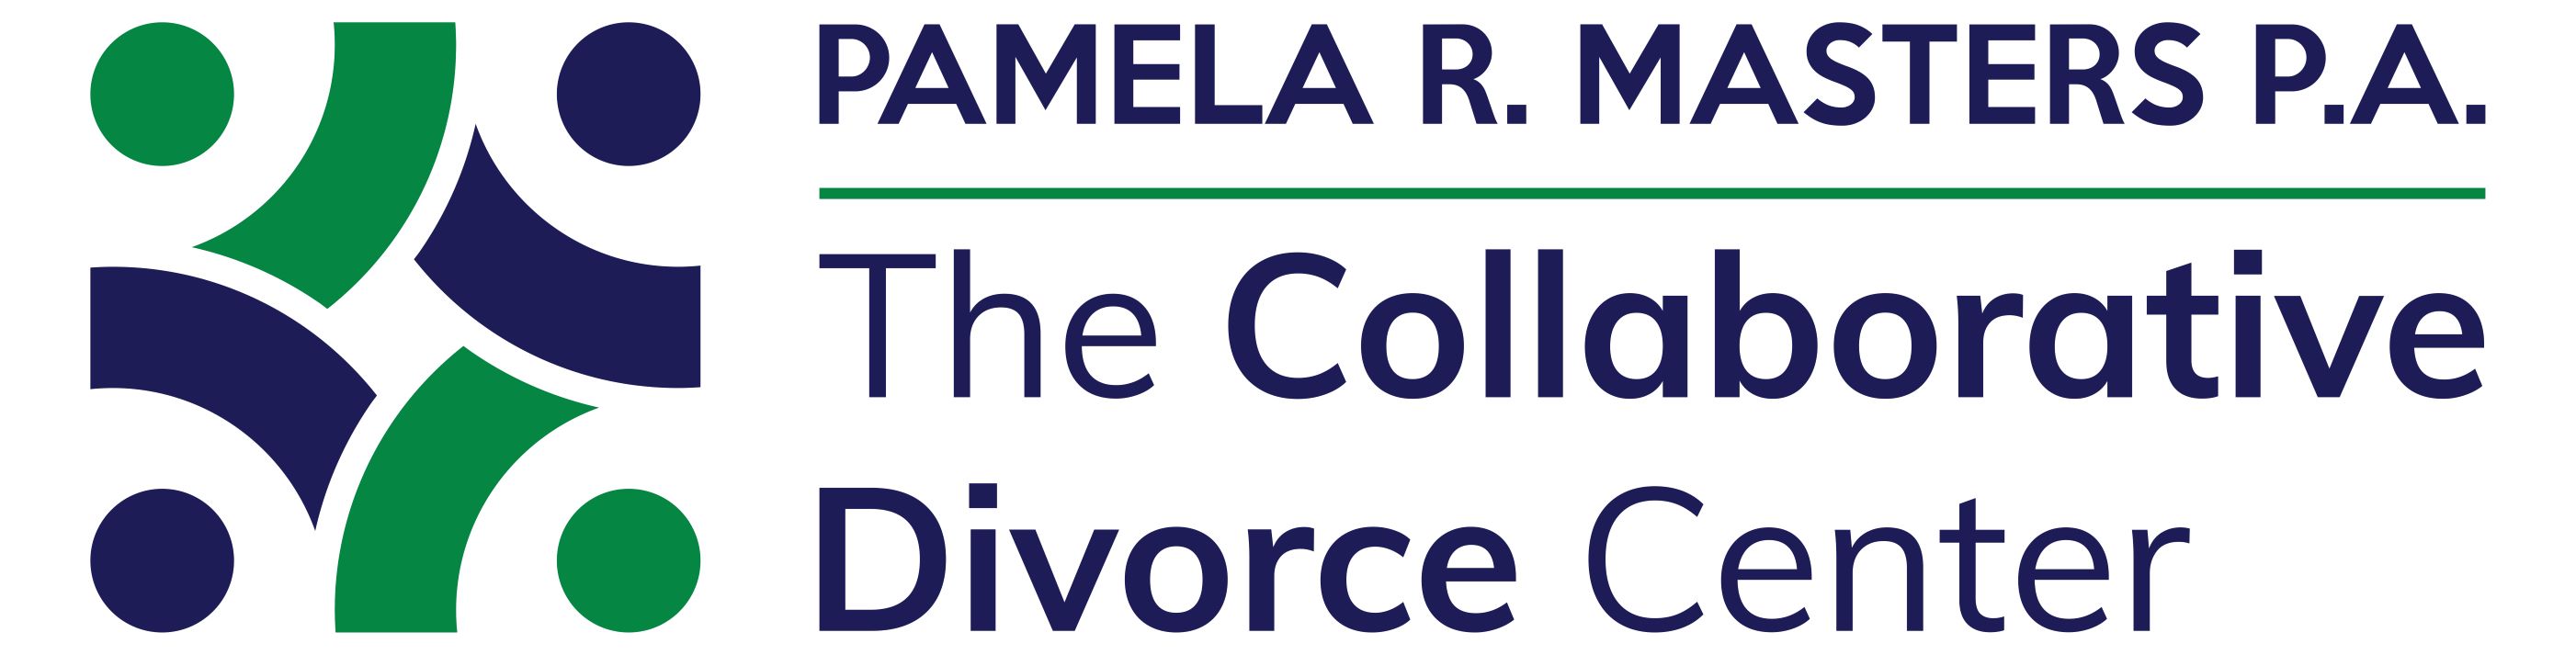 The Collaborative Divorce Center/Pamela R. Masters, P.A.